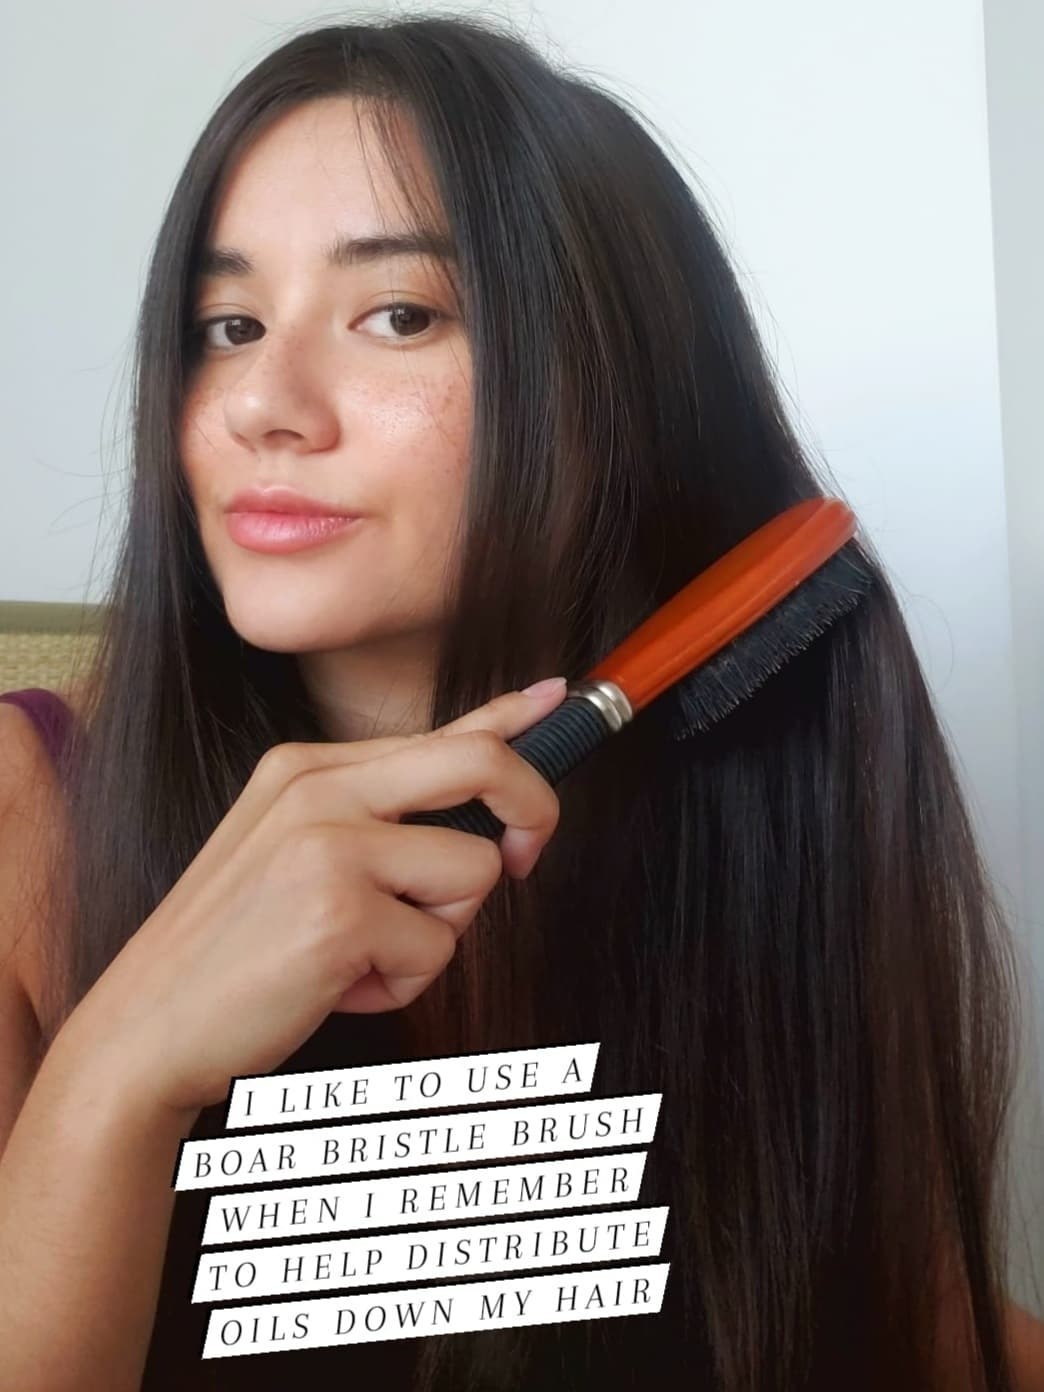 A girl brushing her long, dark hair